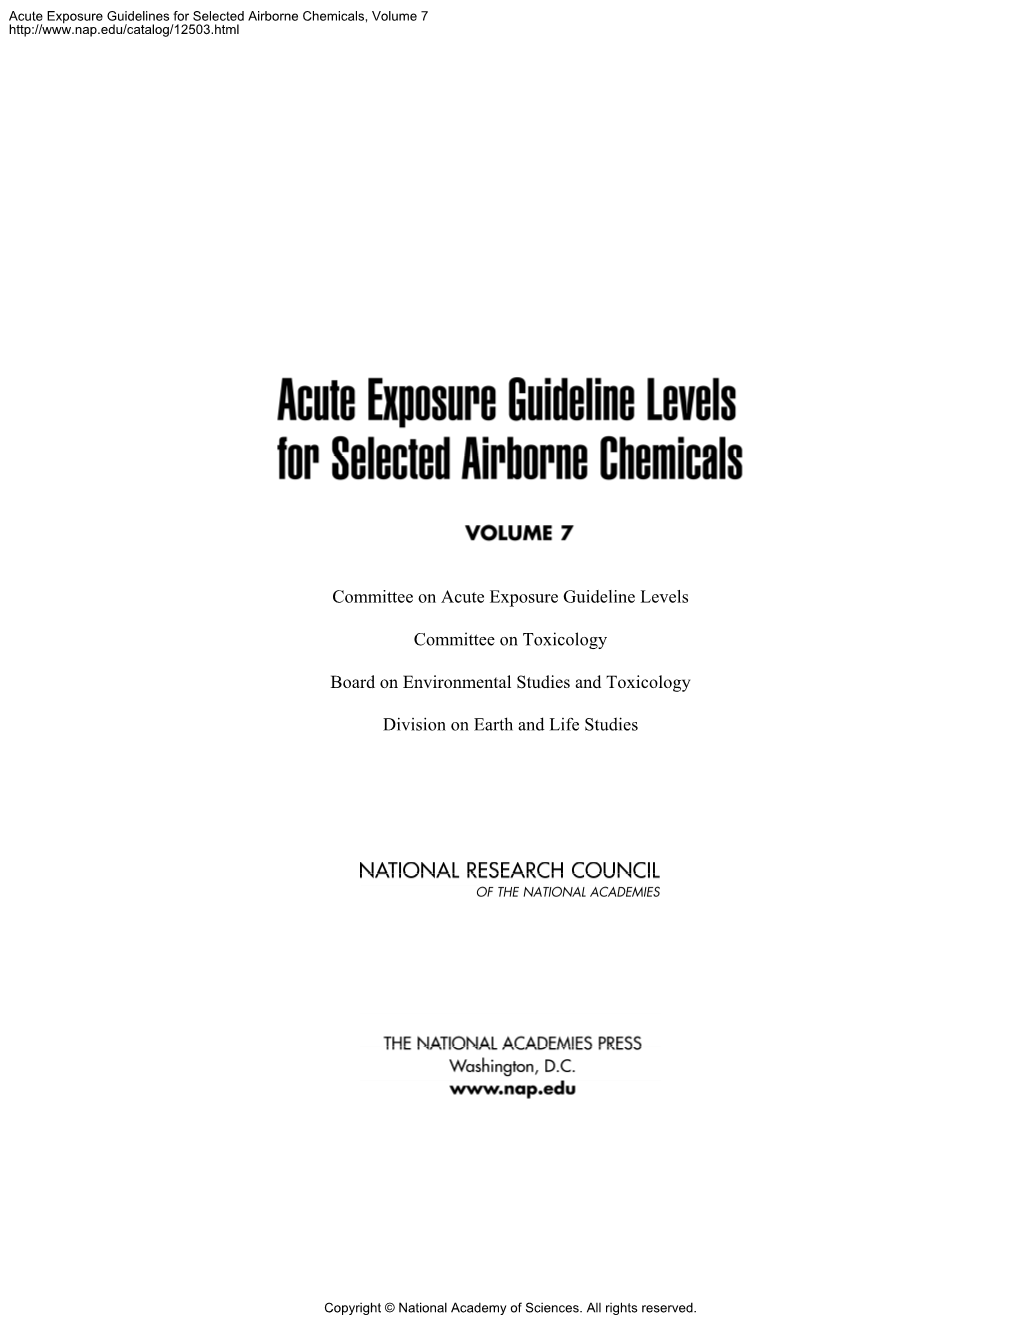 Carbon Disulfide Final AEGL Document